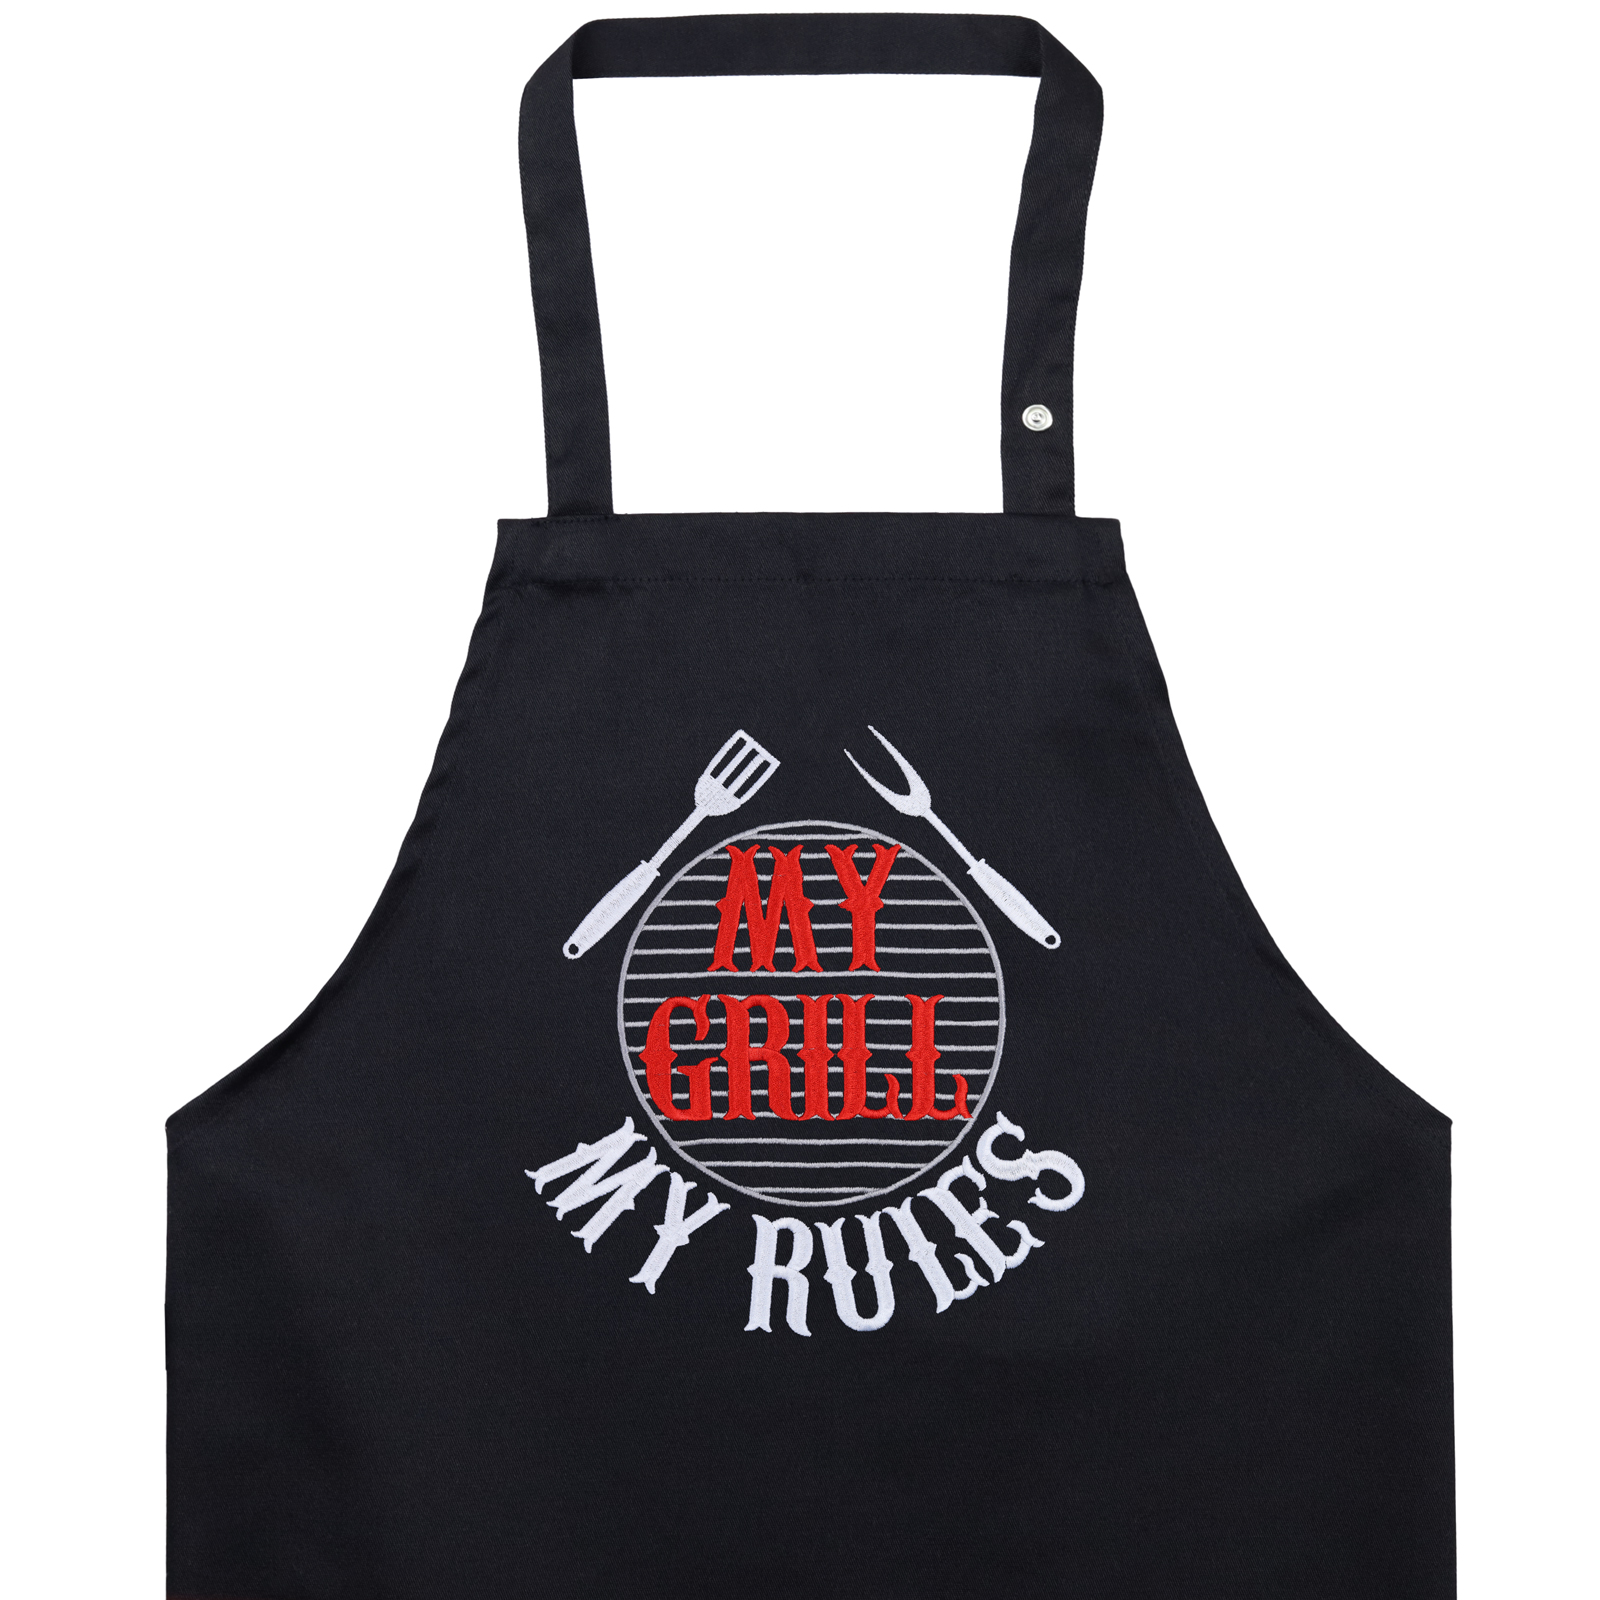 My grill - my rules - Grillschürze